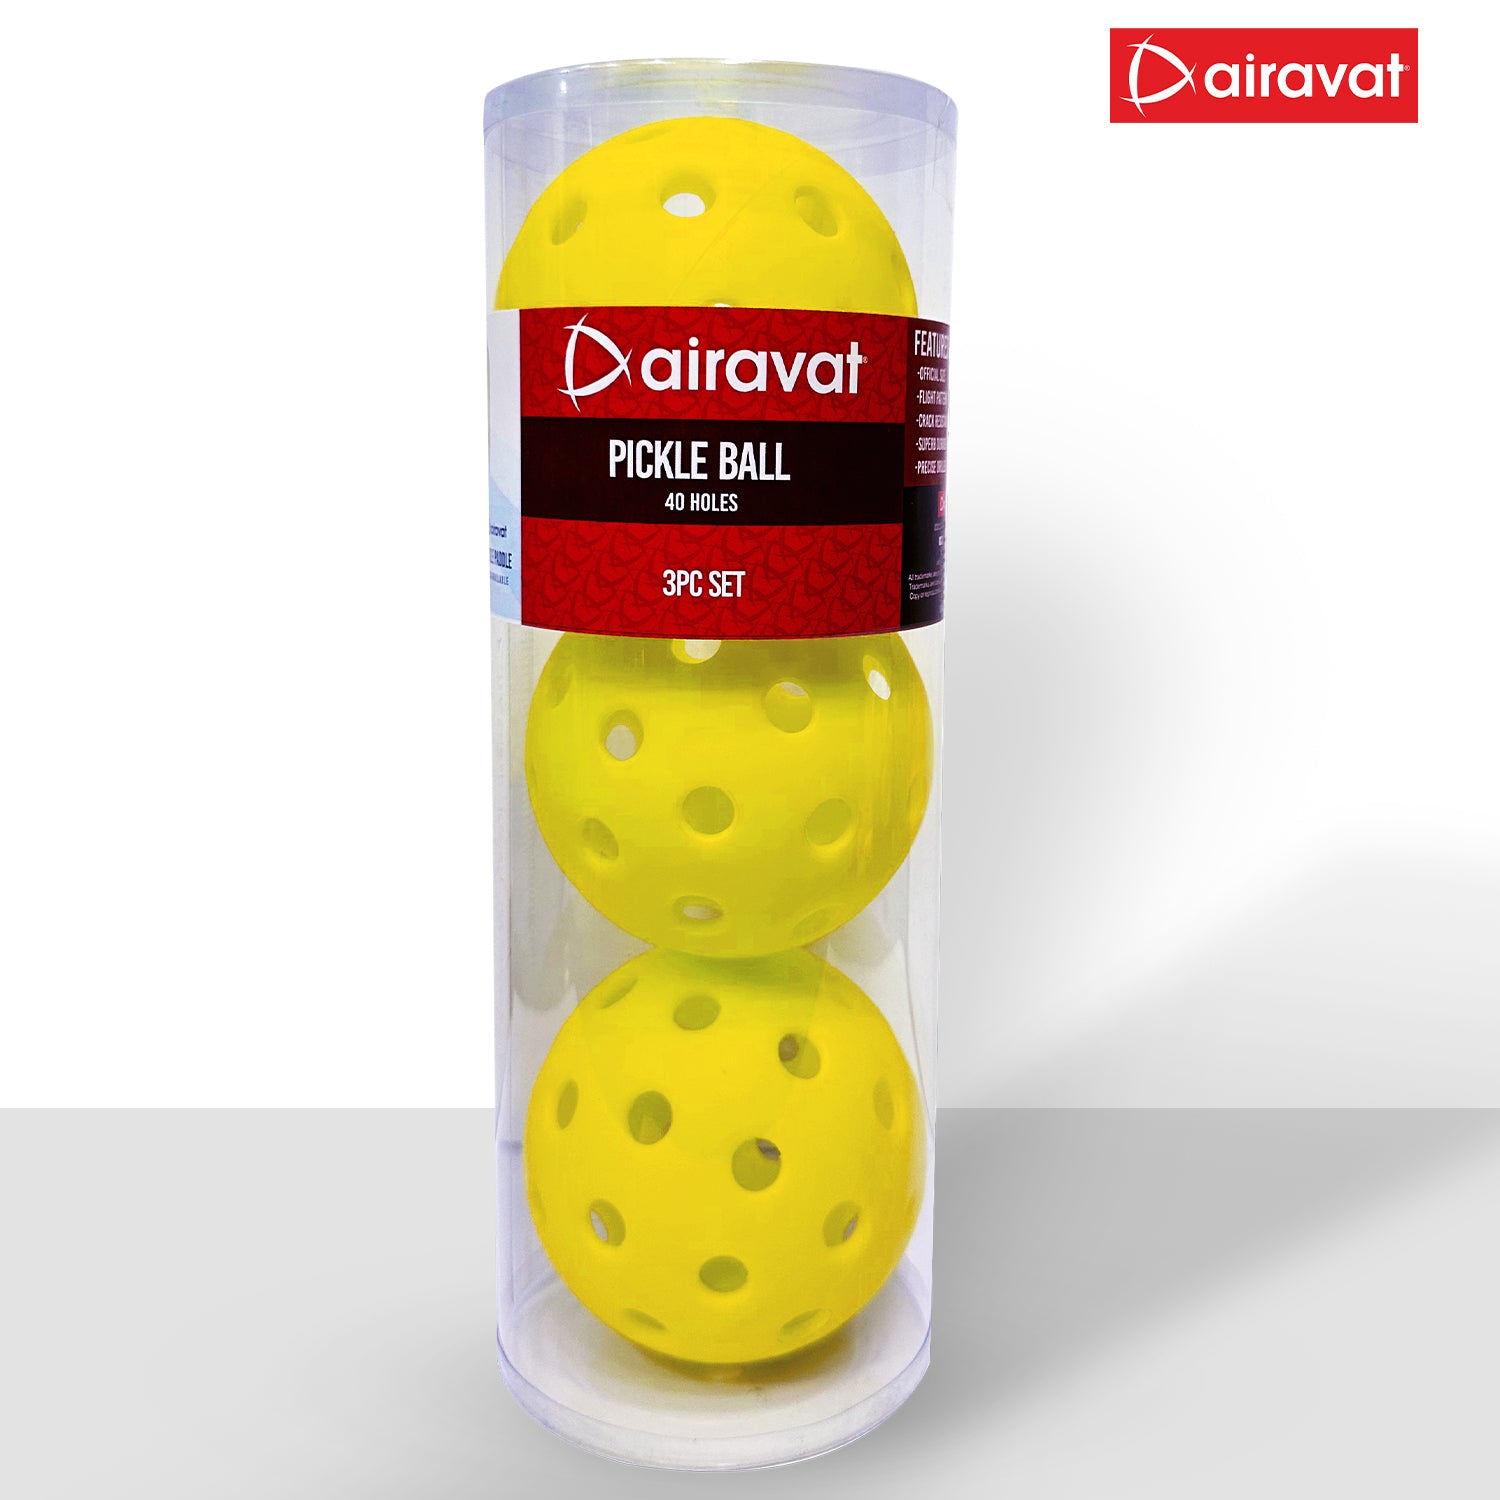 pickle ball box image yellow